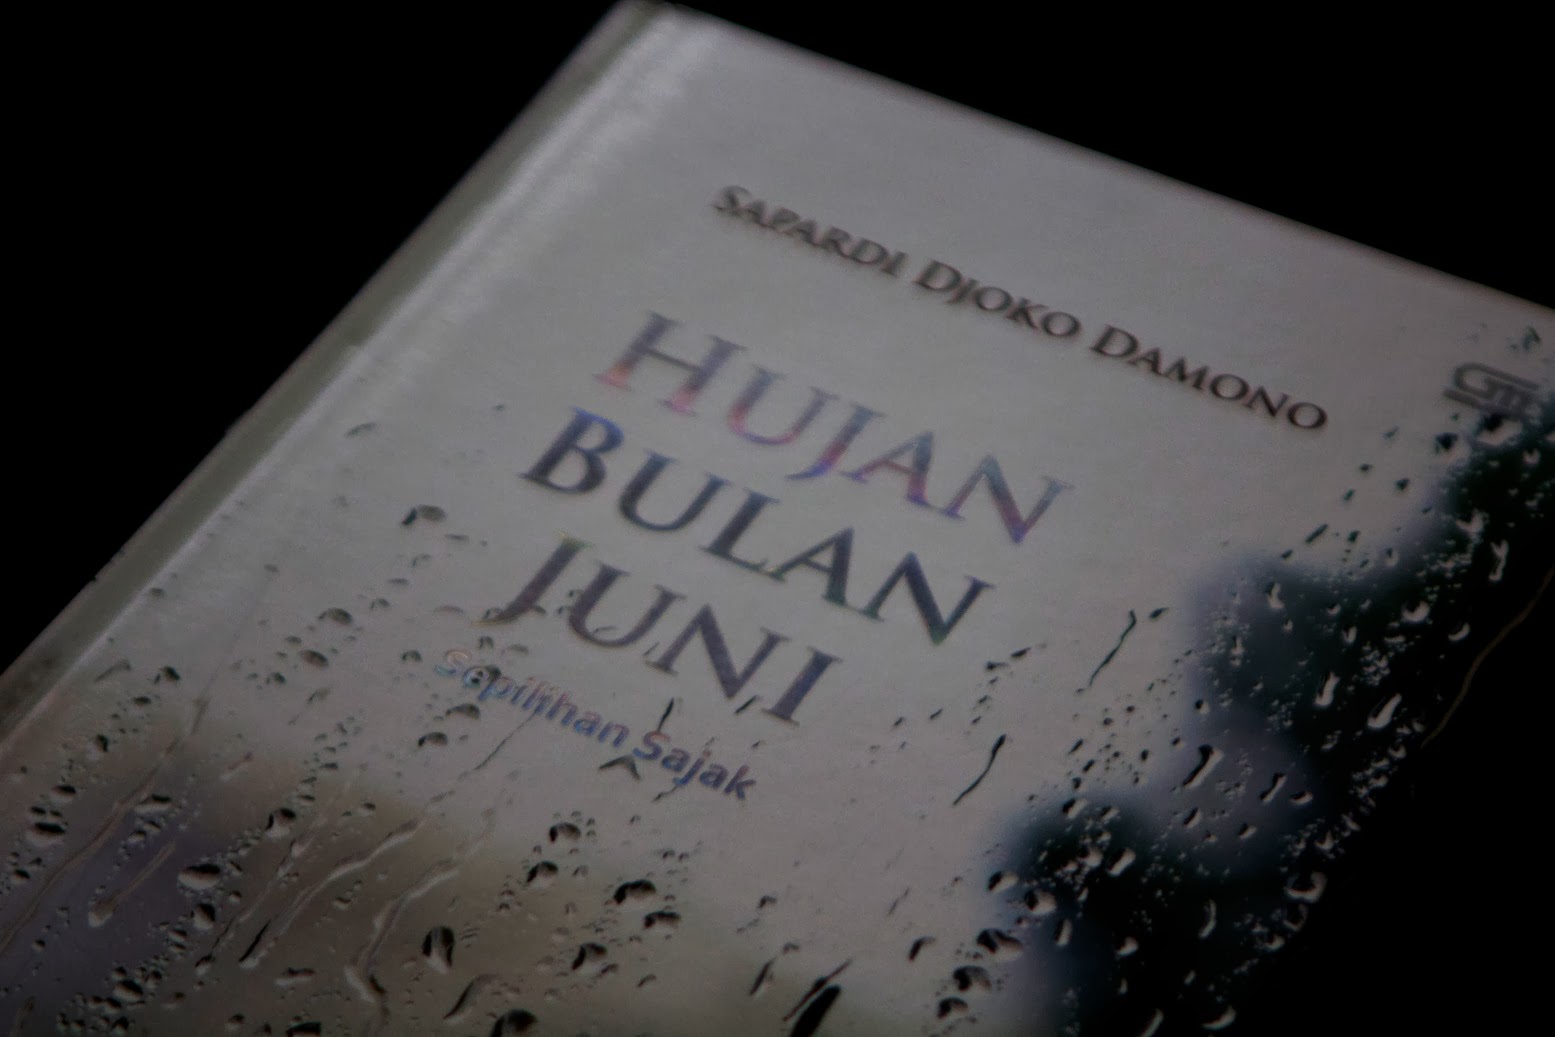 Hujan Bulan Juni Quotes by Sapardi Djoko Damono ~ Story of TheNaskun